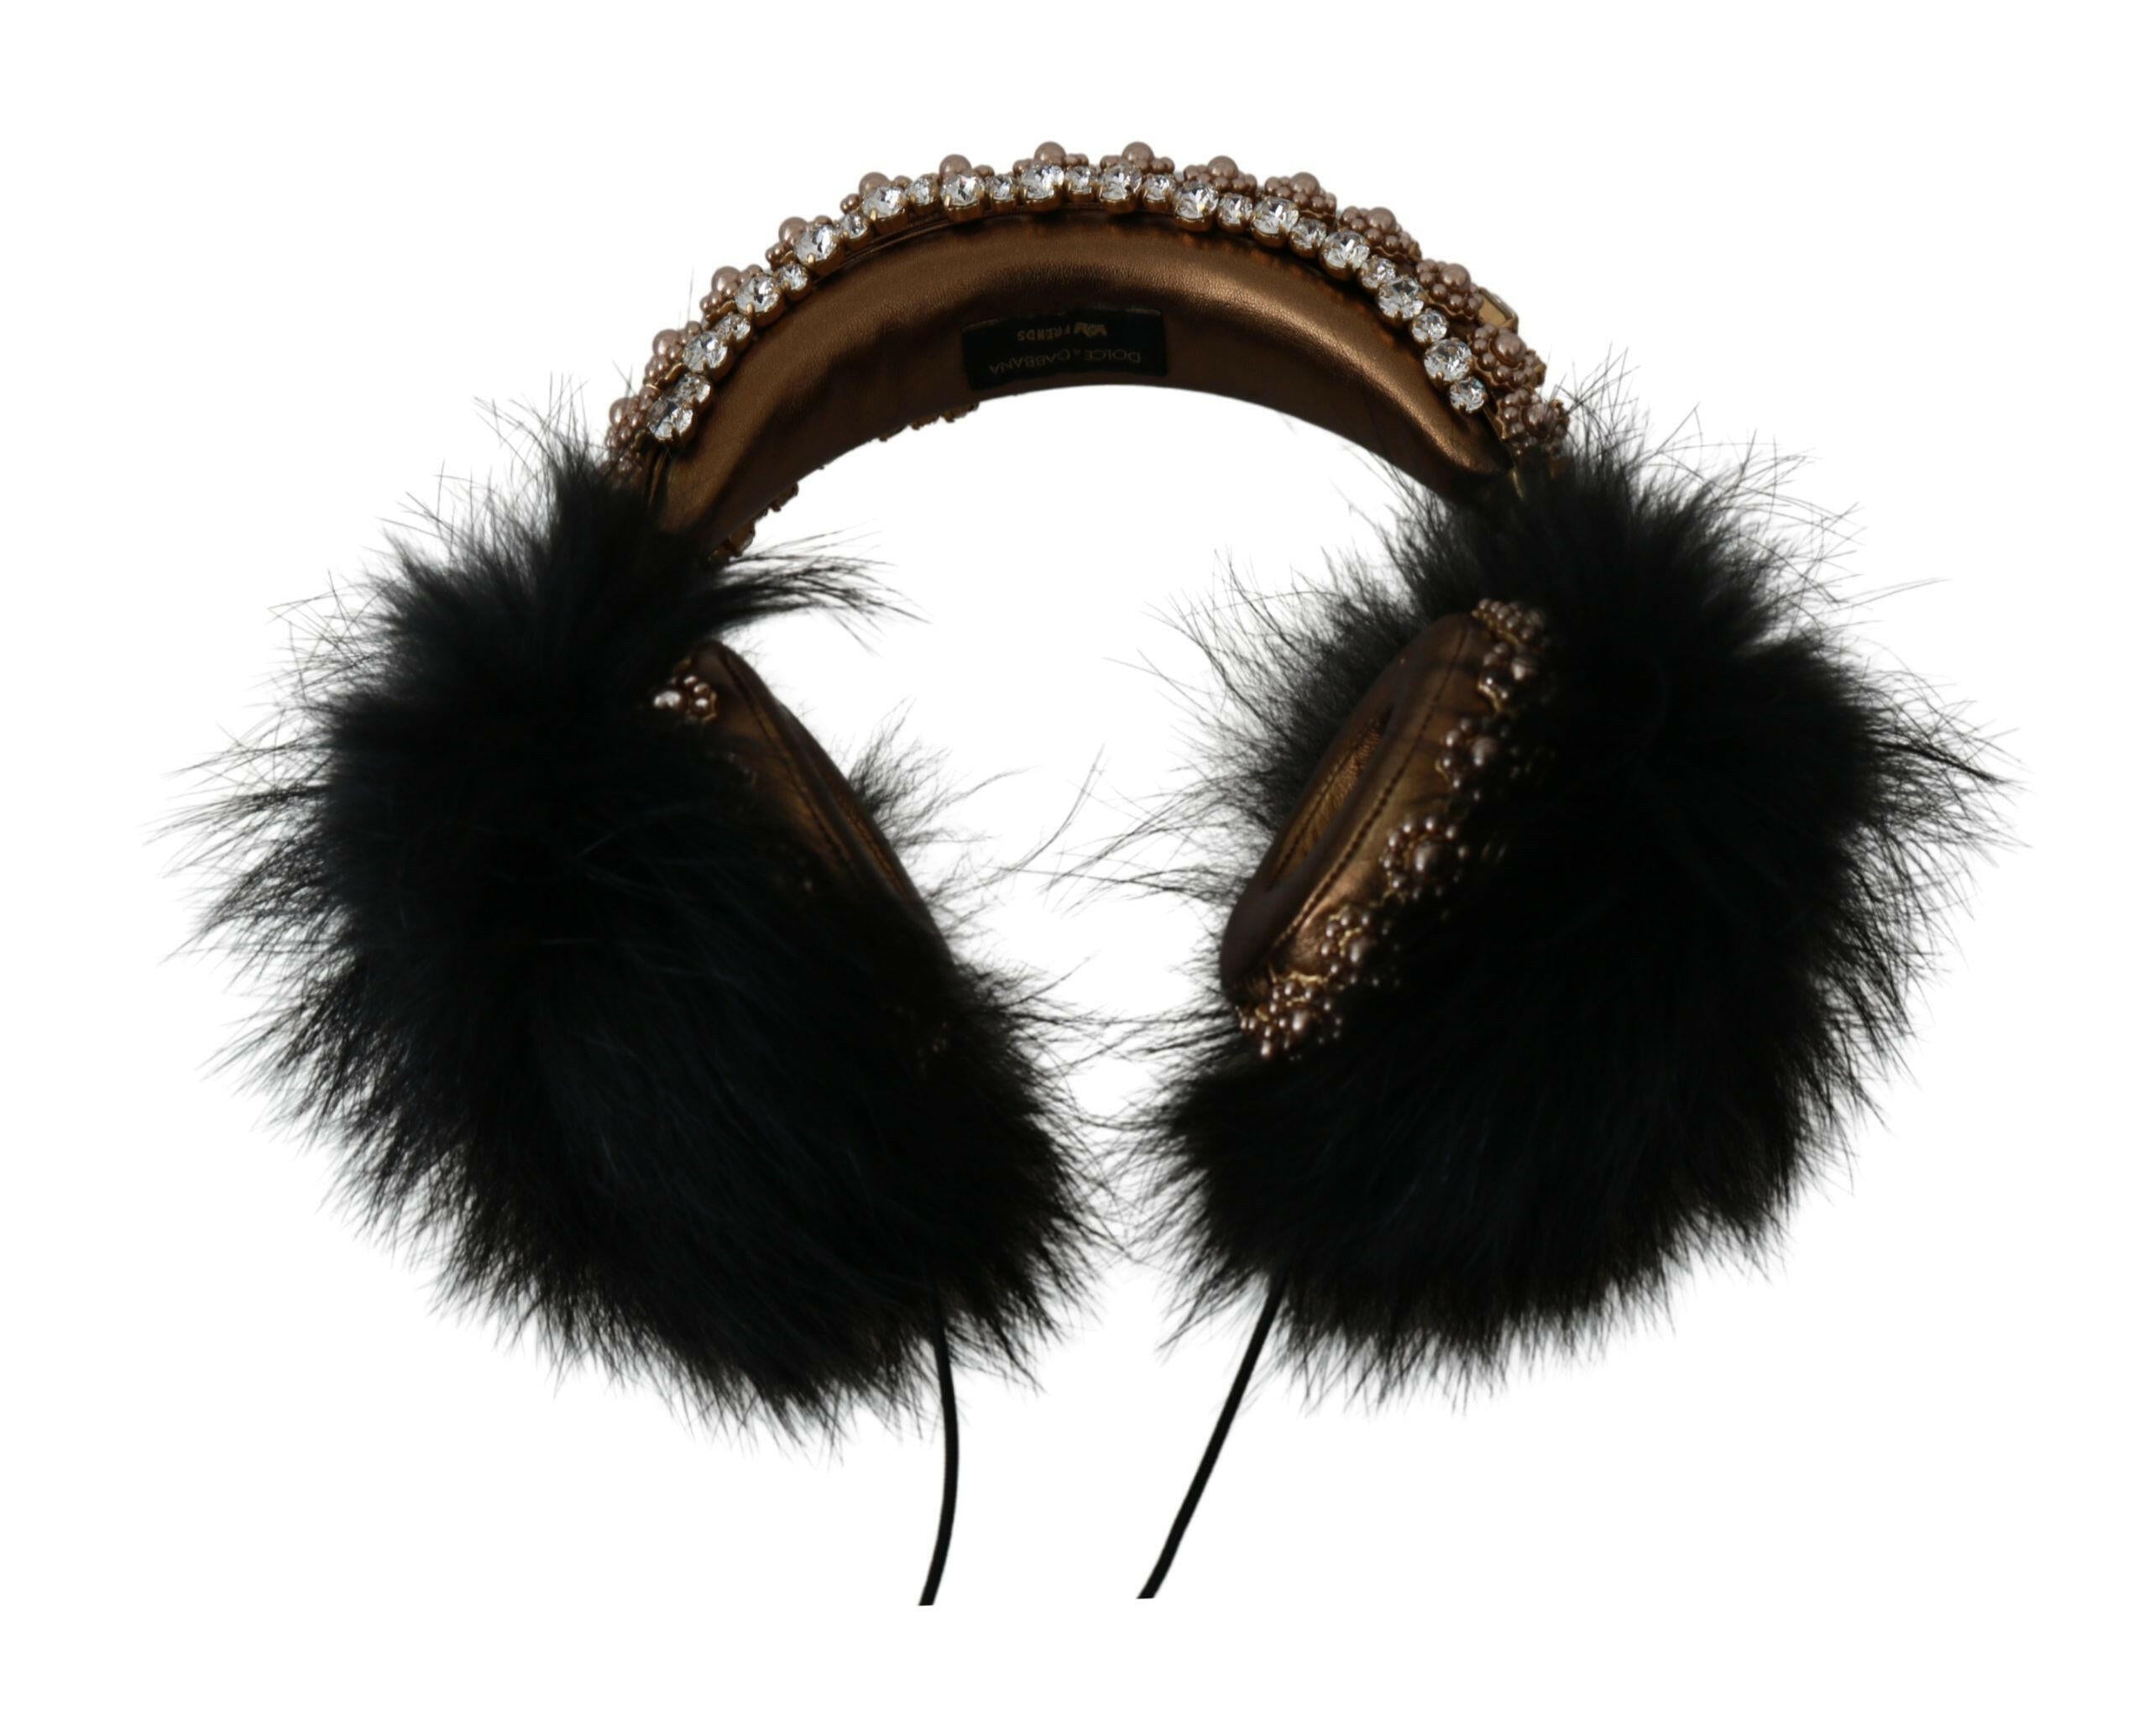 Dolce & Gabbana Gold Black Crystal Fur Headset Audio Headphones - GENUINE AUTHENTIC BRAND LLC  